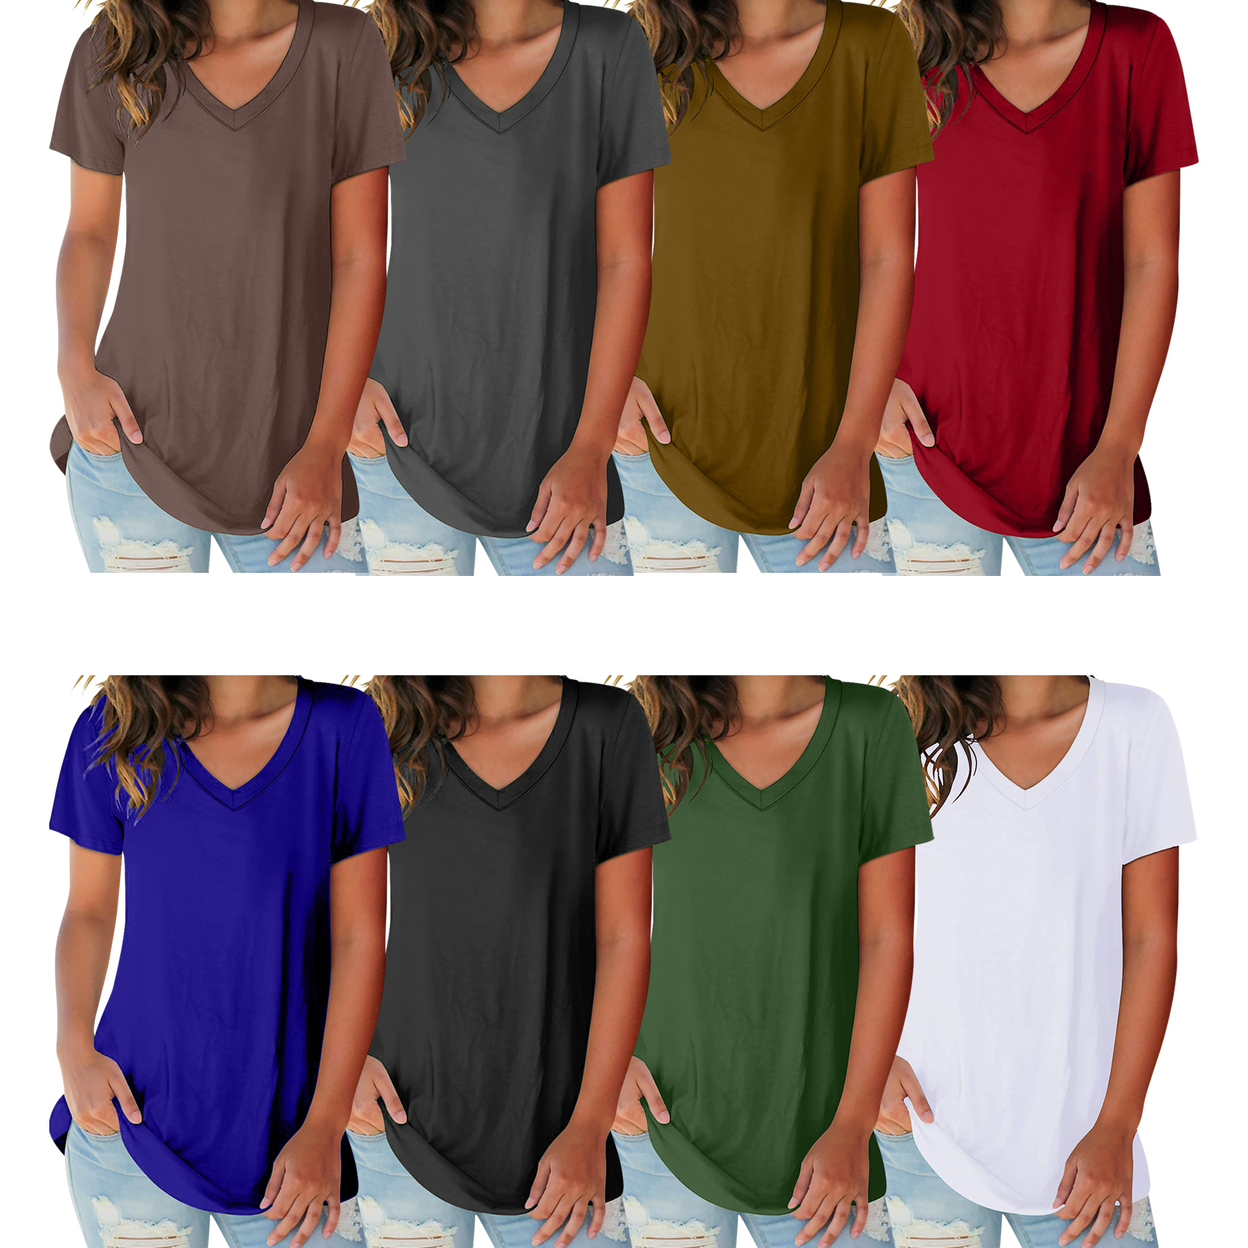 2-Pack: Women's Ultra Soft Smooth Cotton Blend Basic V-Neck Short Sleeve Shirts - Black & Mustard, Small